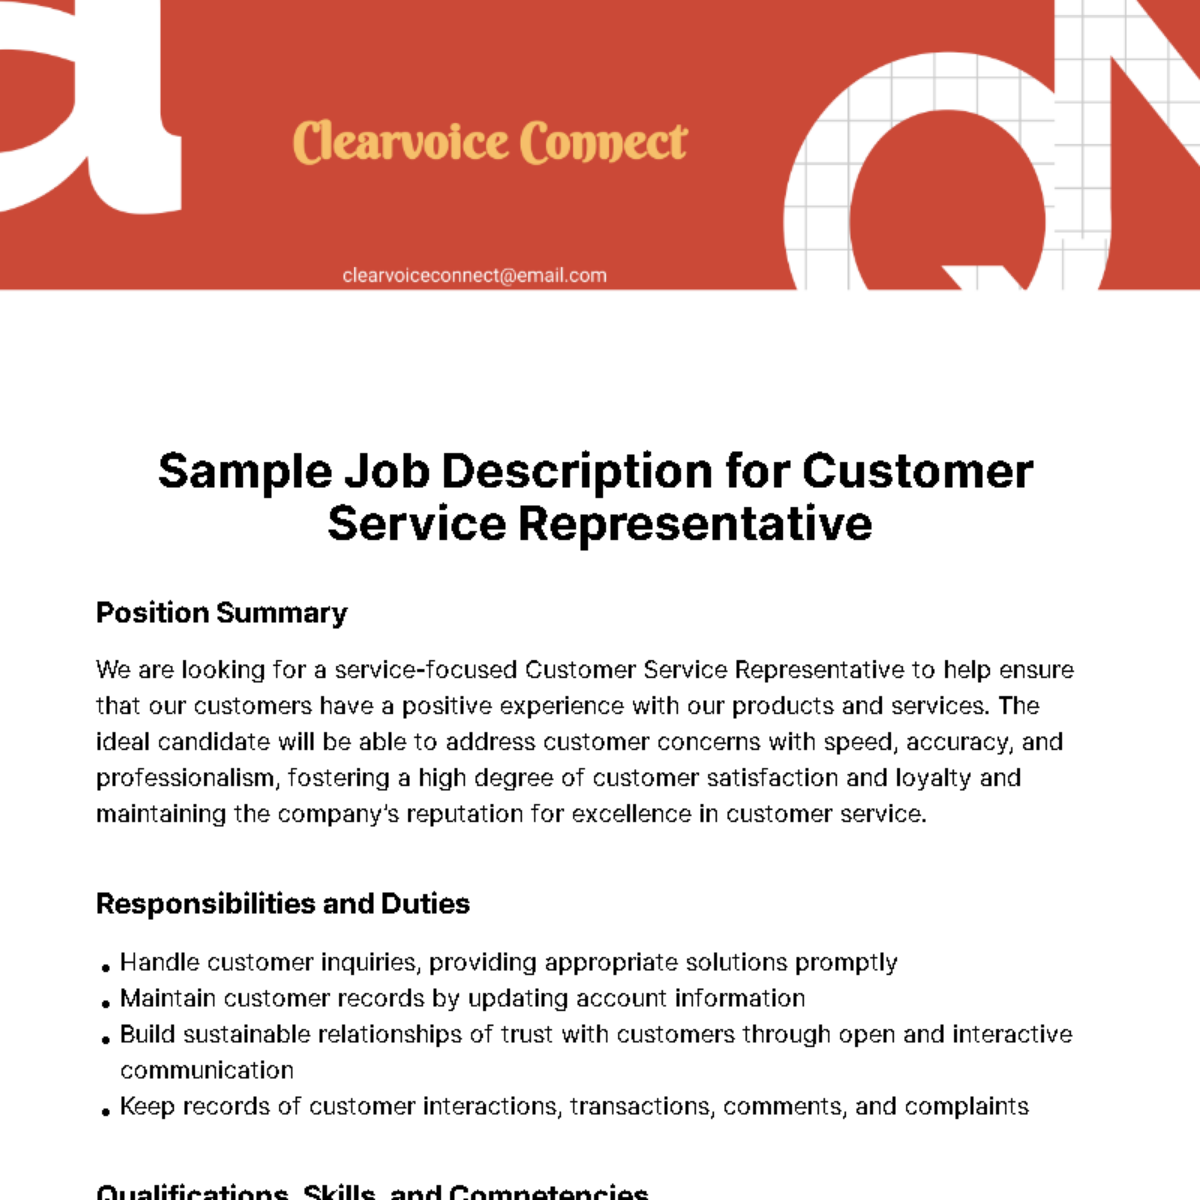 Sample Job Description for Customer Service Representative Template